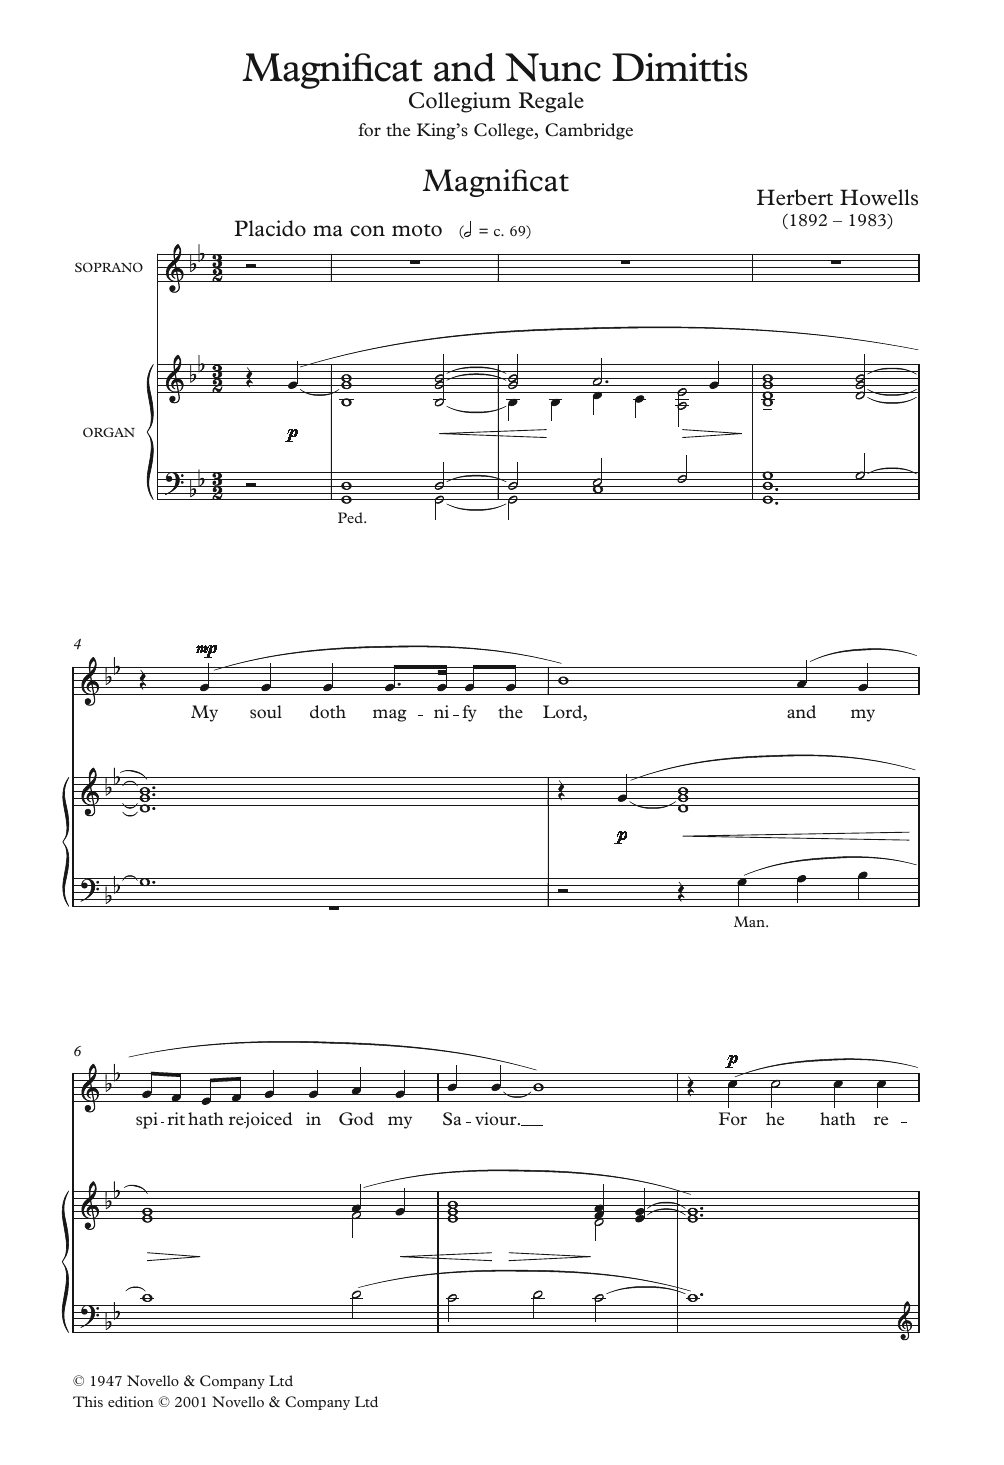 Download Herbert Howells Collegium Regale 1945 Magnificat And Nu Sheet Music